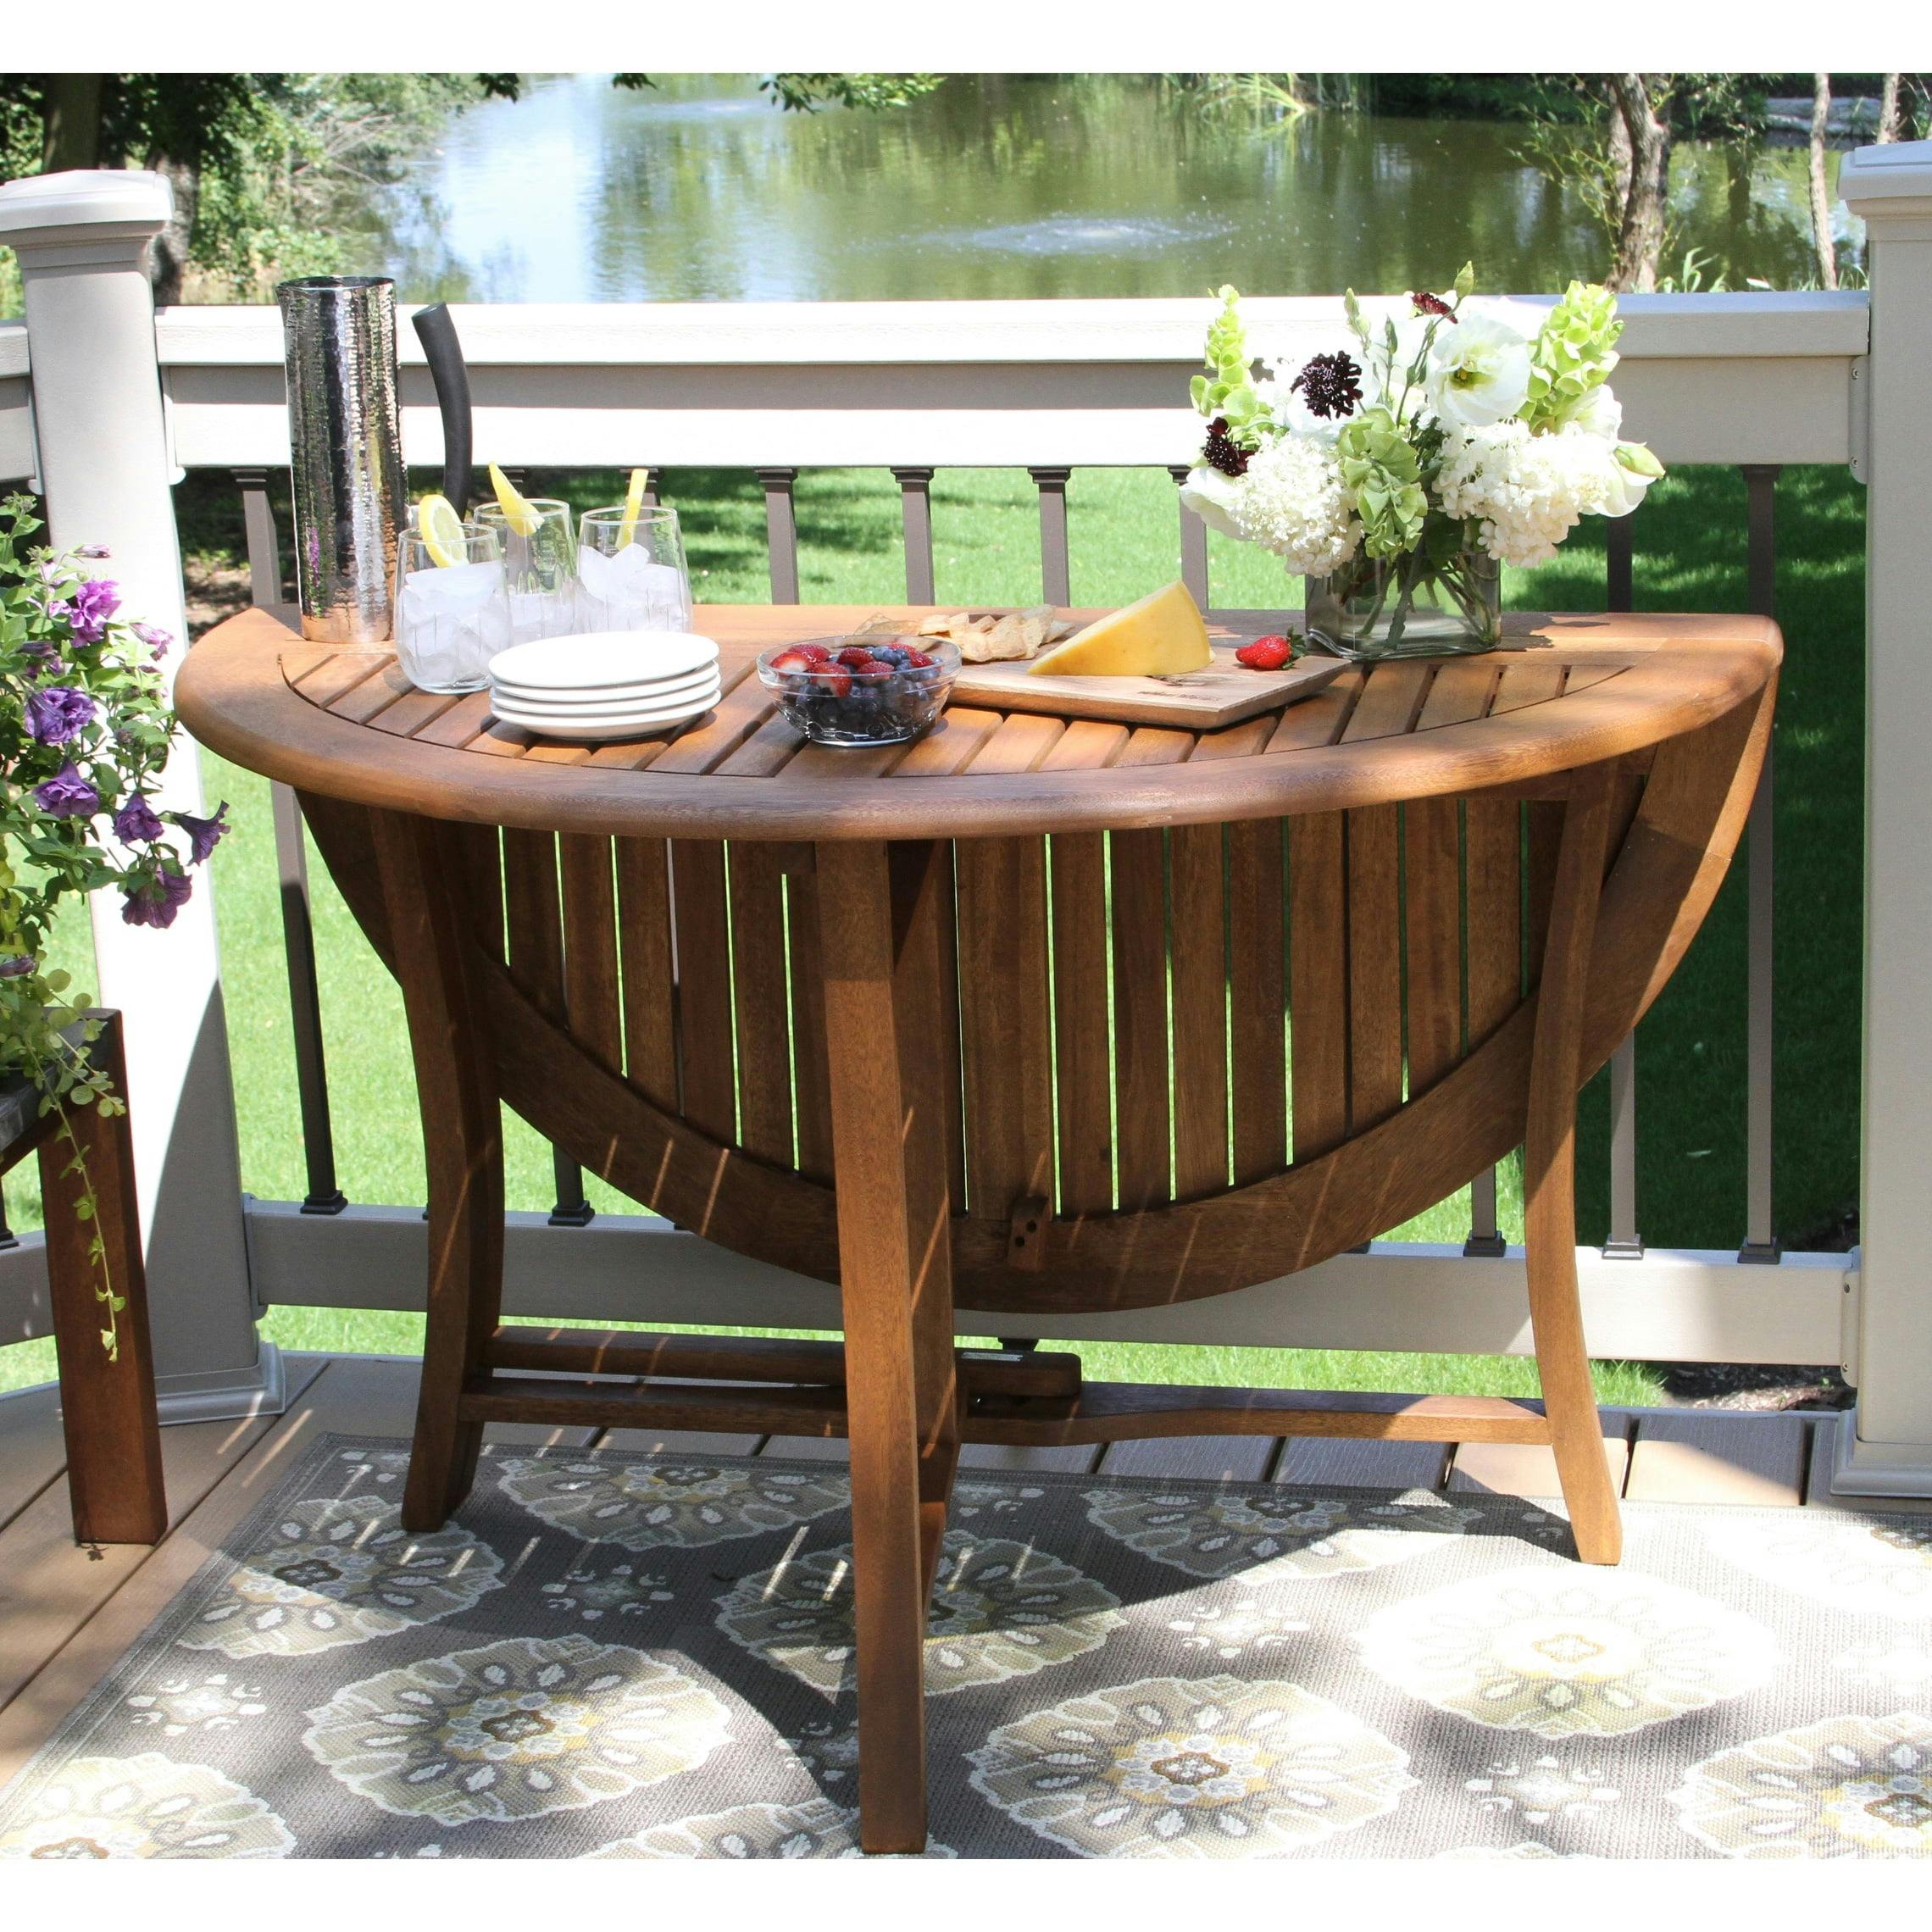 Eilaf 48" Round Folding Eucalyptus Outdoor Table with Umbrella Hole